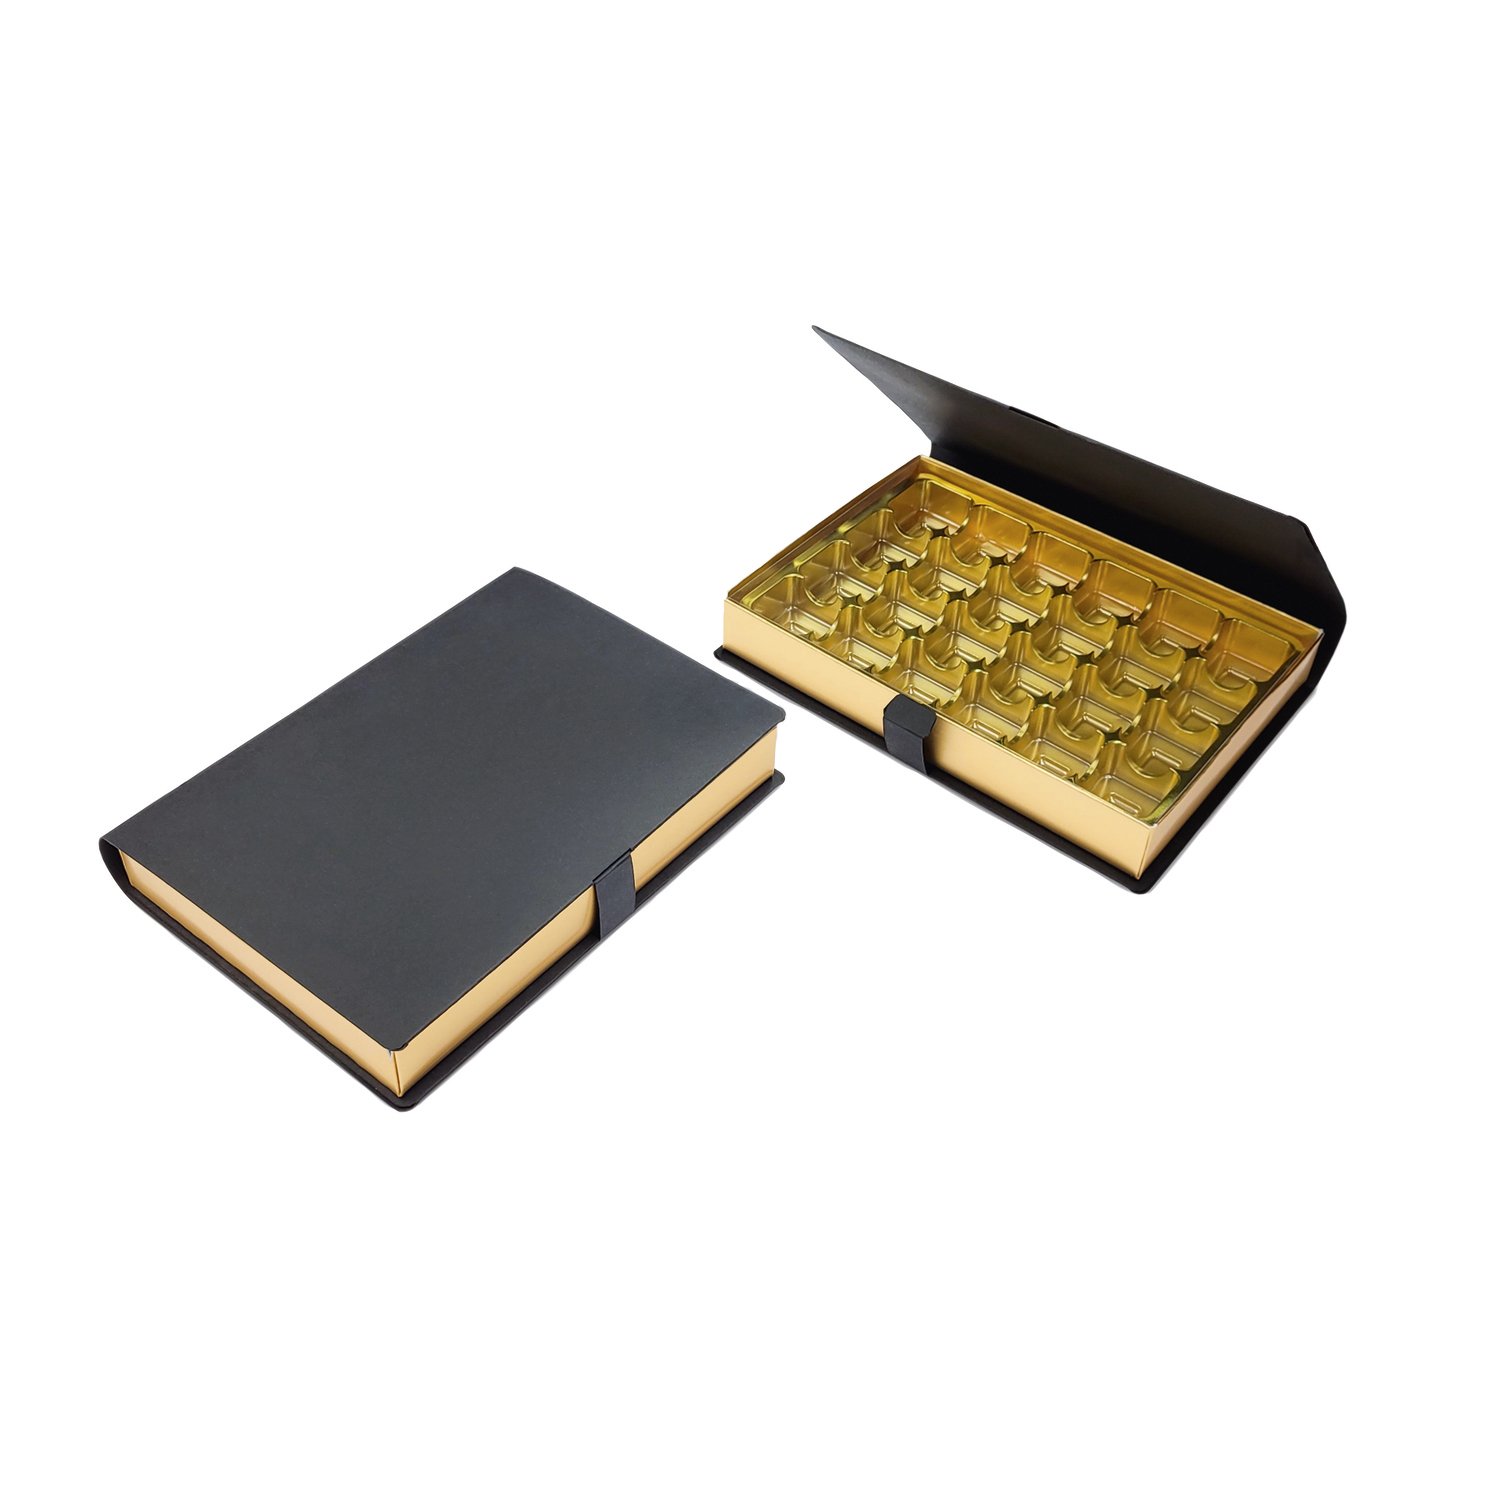 24 choc hinged lid book box with gold vac tray 217 x 157 x 32 - 10pcs